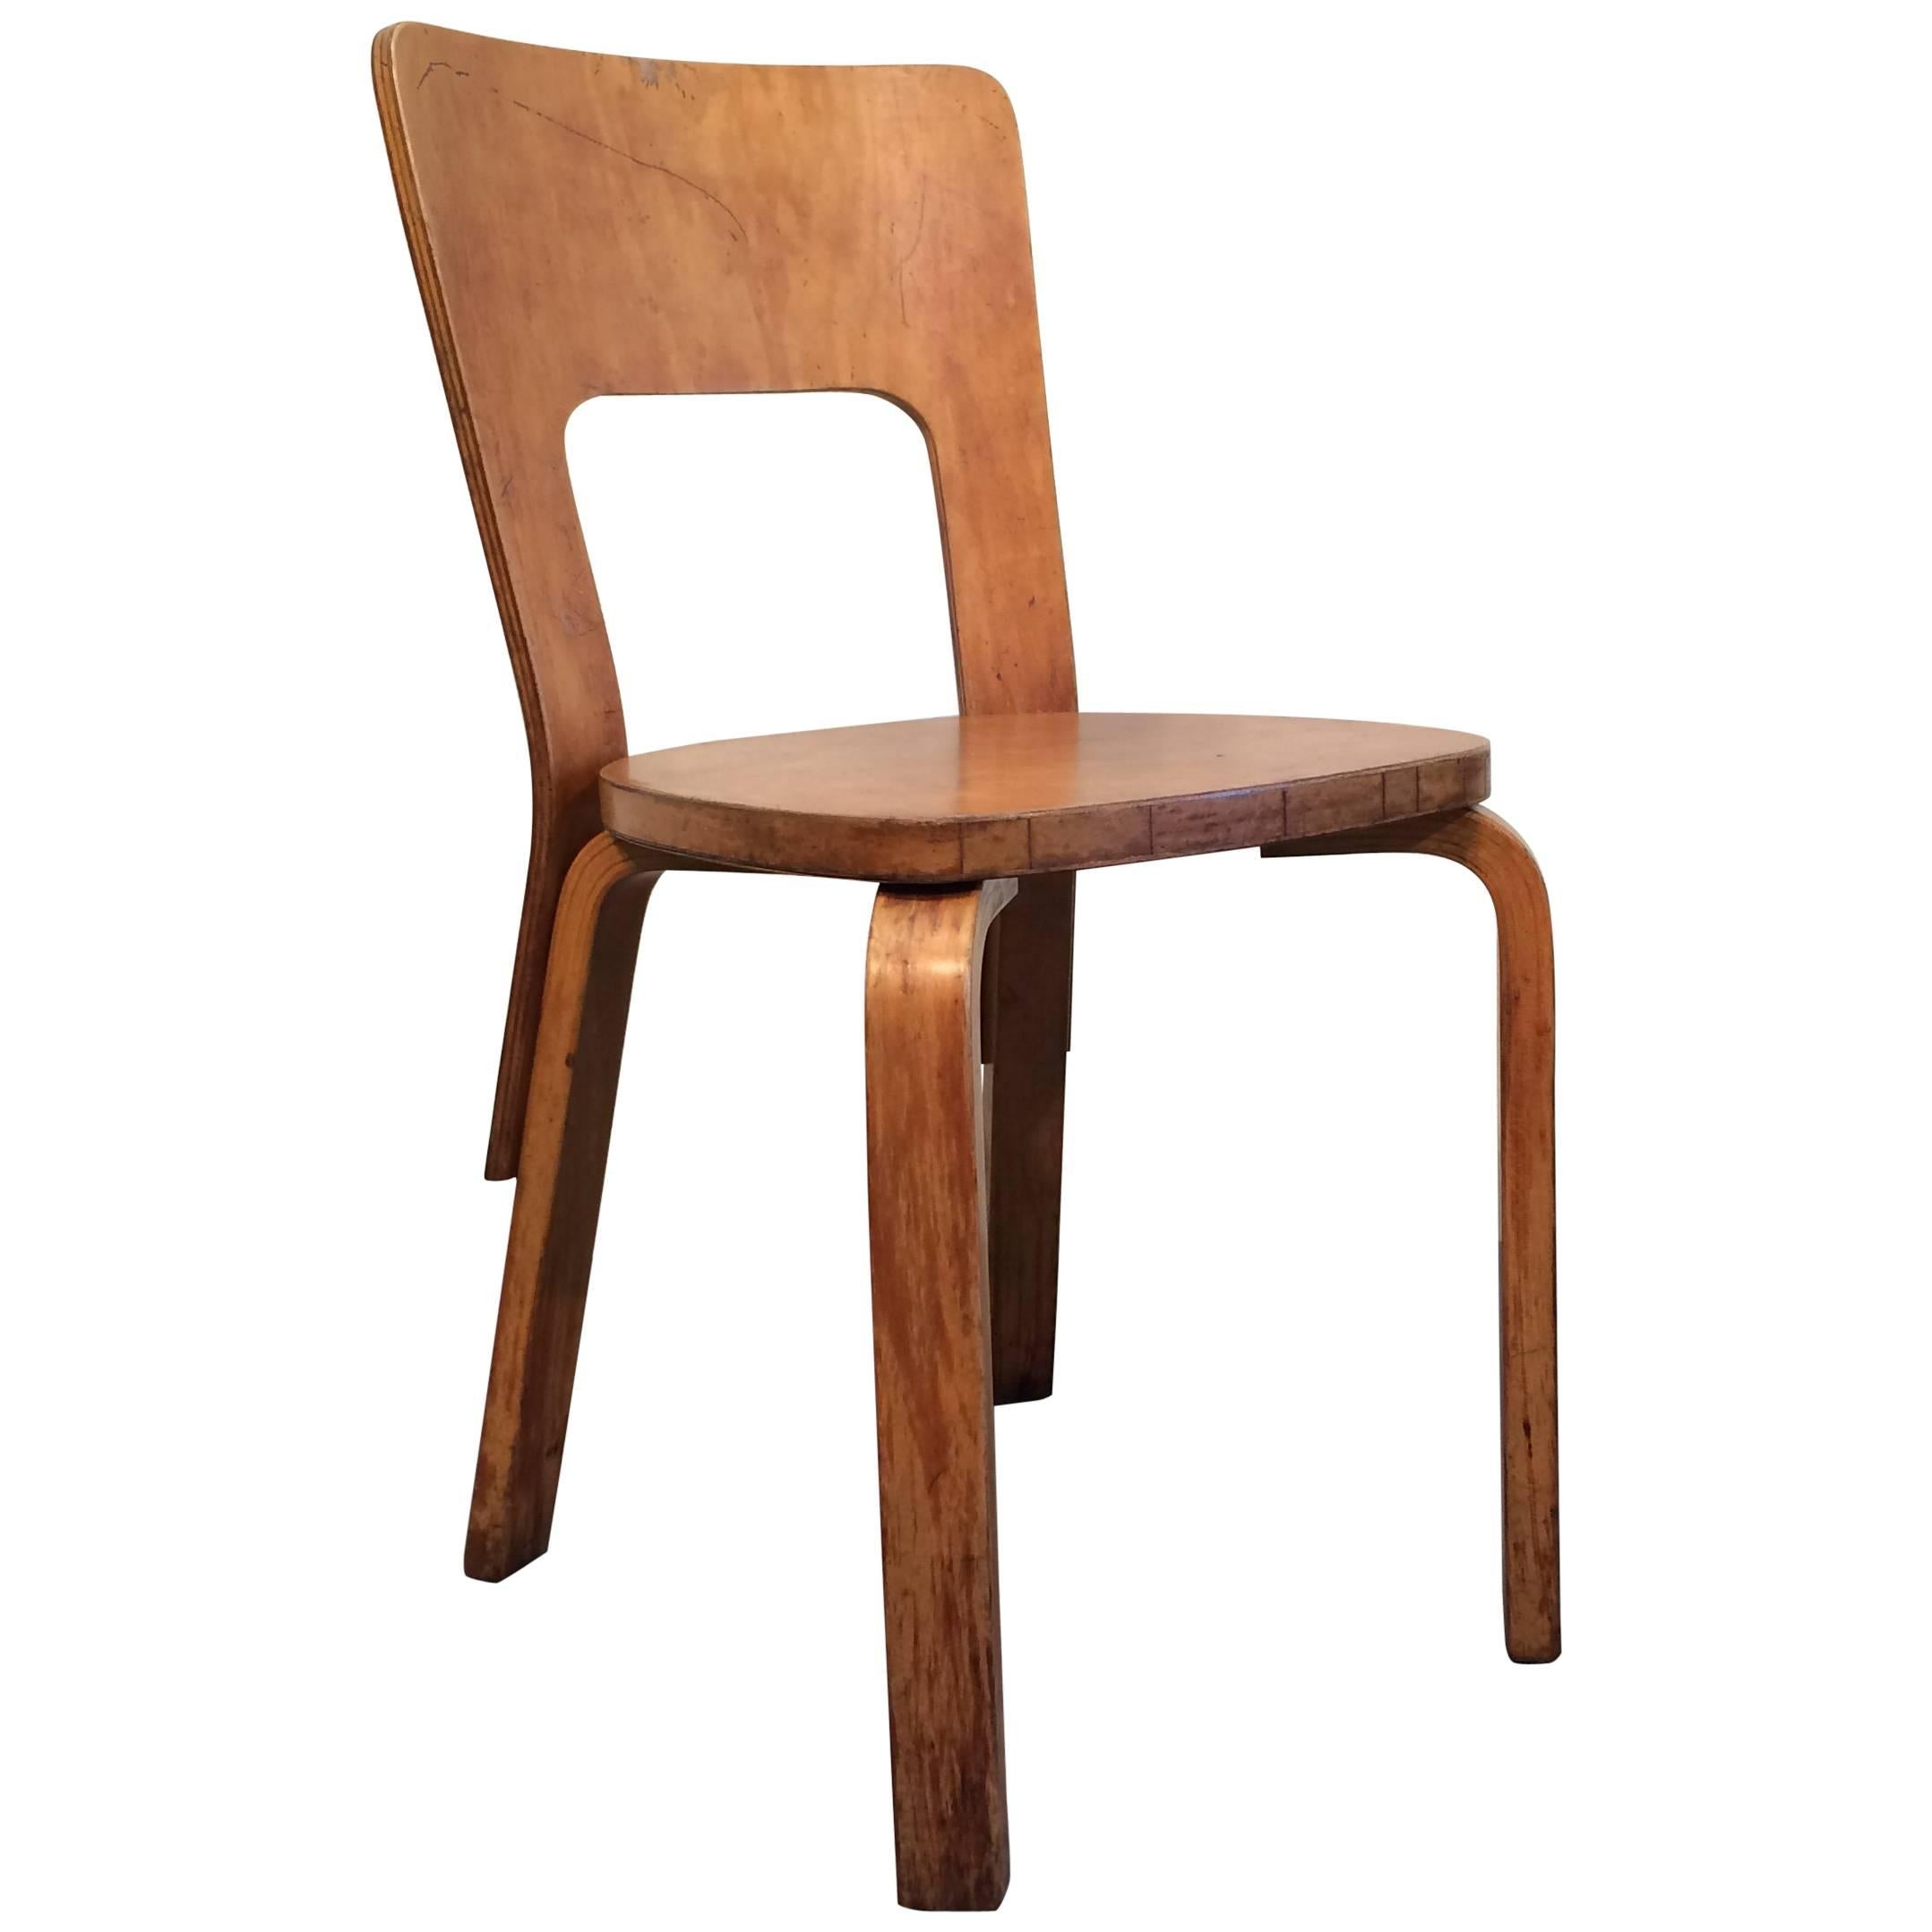 Early Alvar Aalto Desk or Side Chair 66